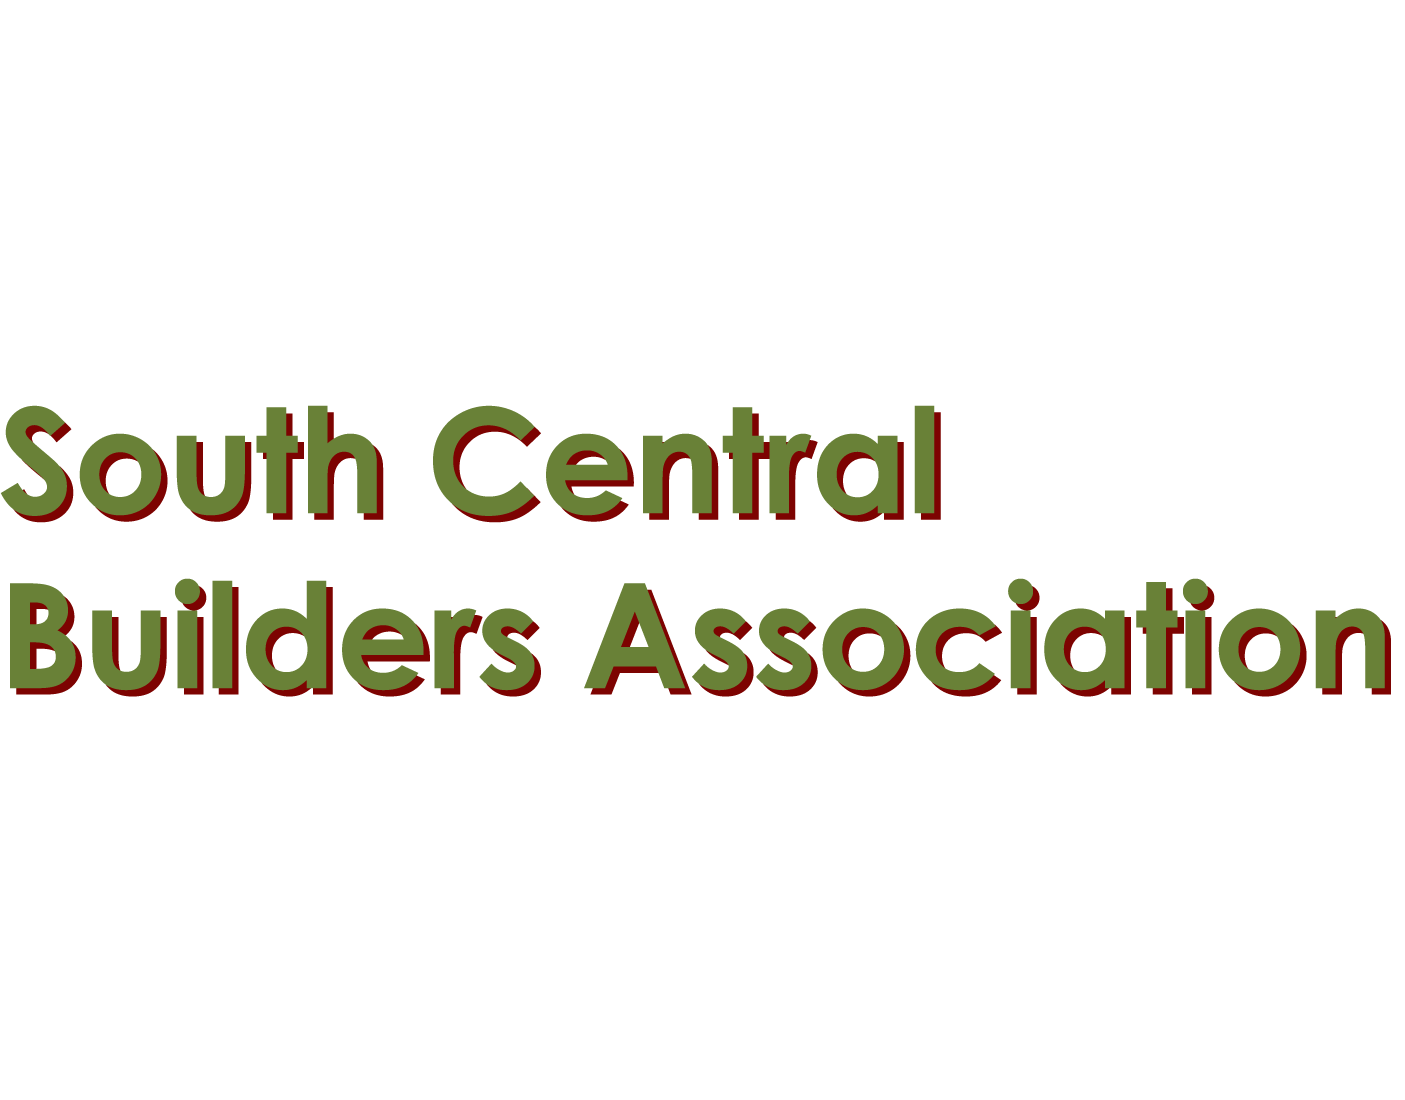 South Central Builders Association